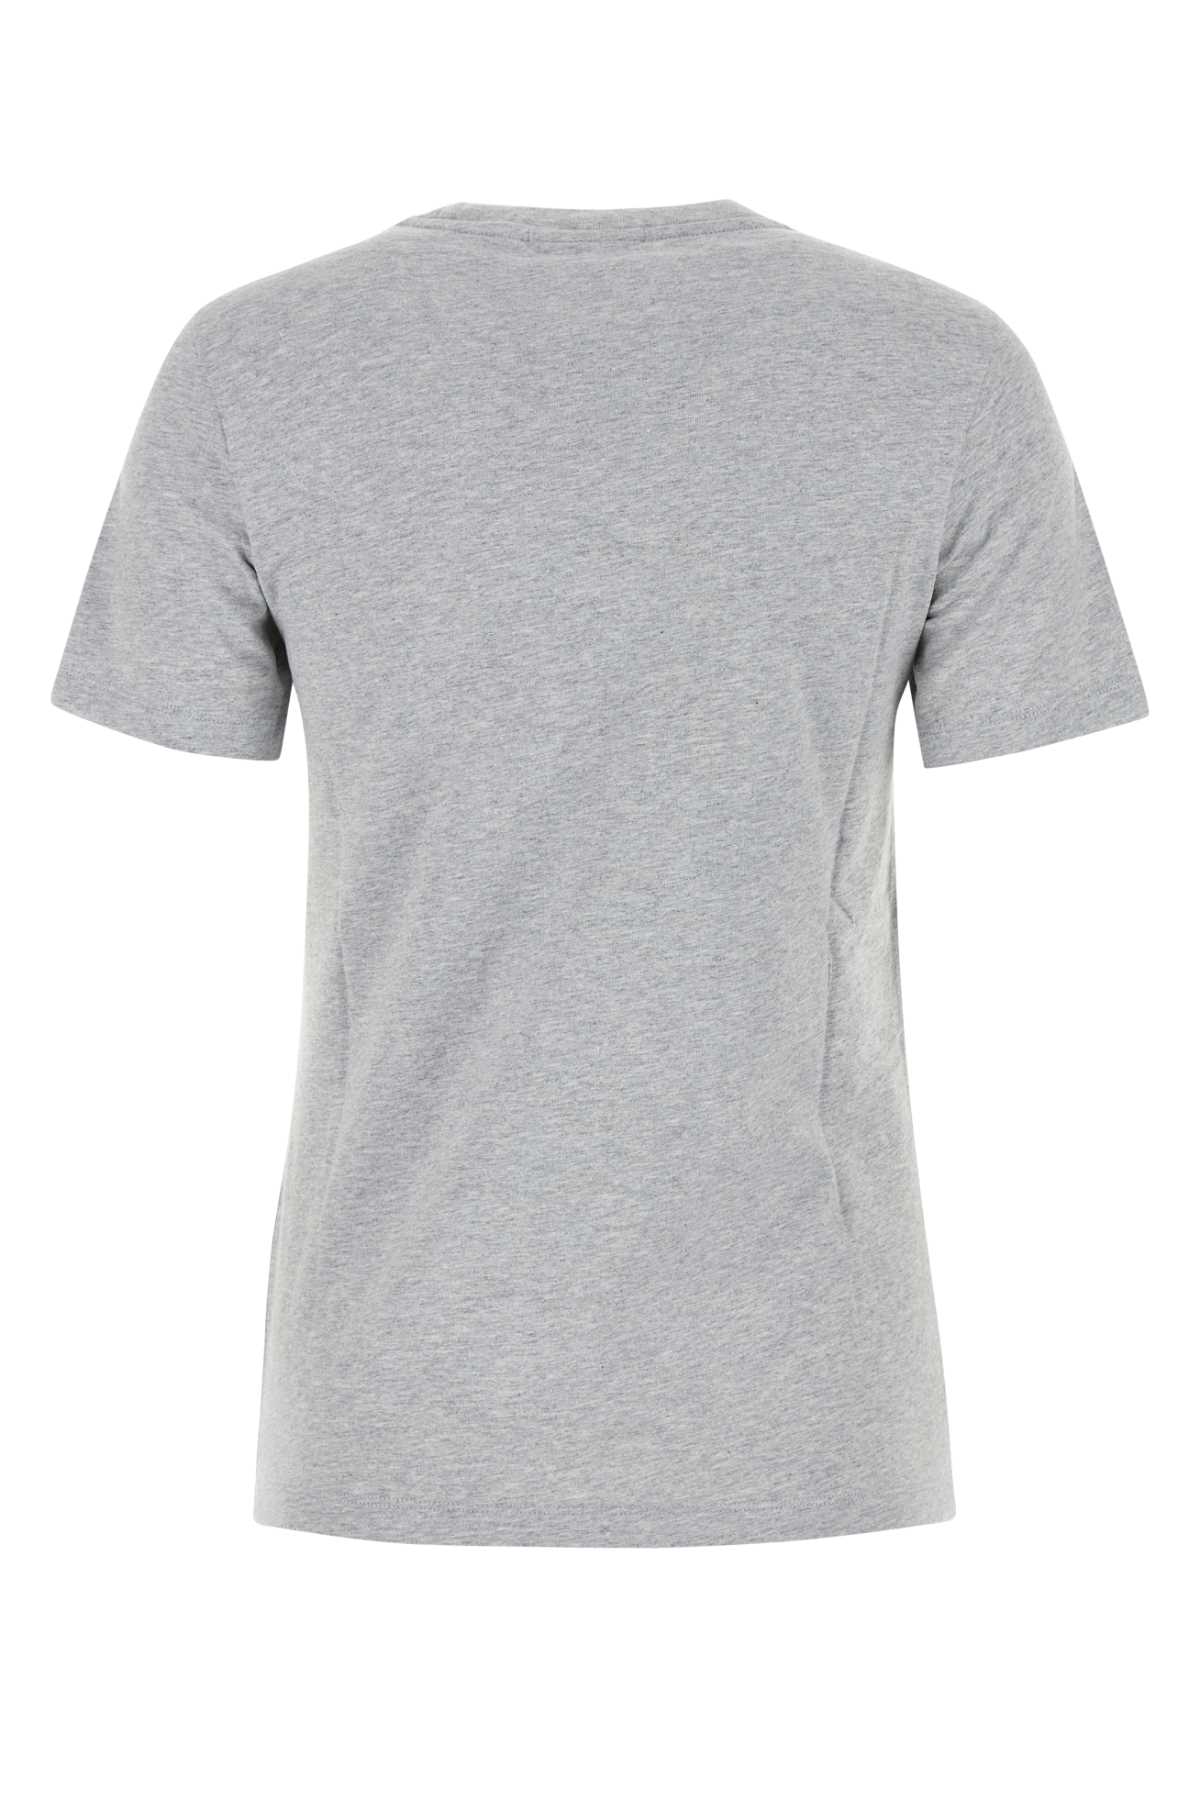 Maison Kitsuné Melange Grey Cotton T-shirt In Light Grey Melange